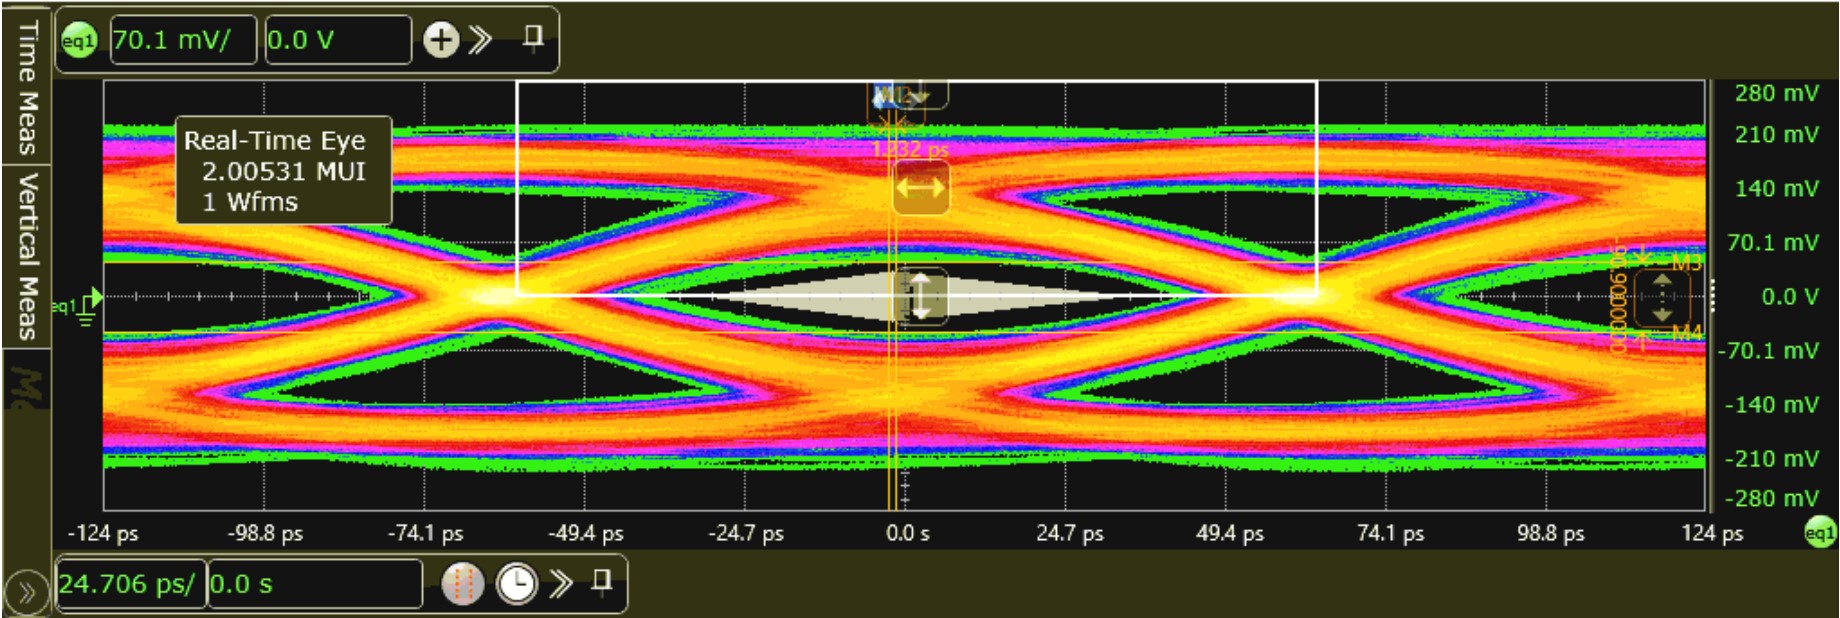  DisplayPort 4.6-Meter System Test Results at 8.1Gbps Lane 2